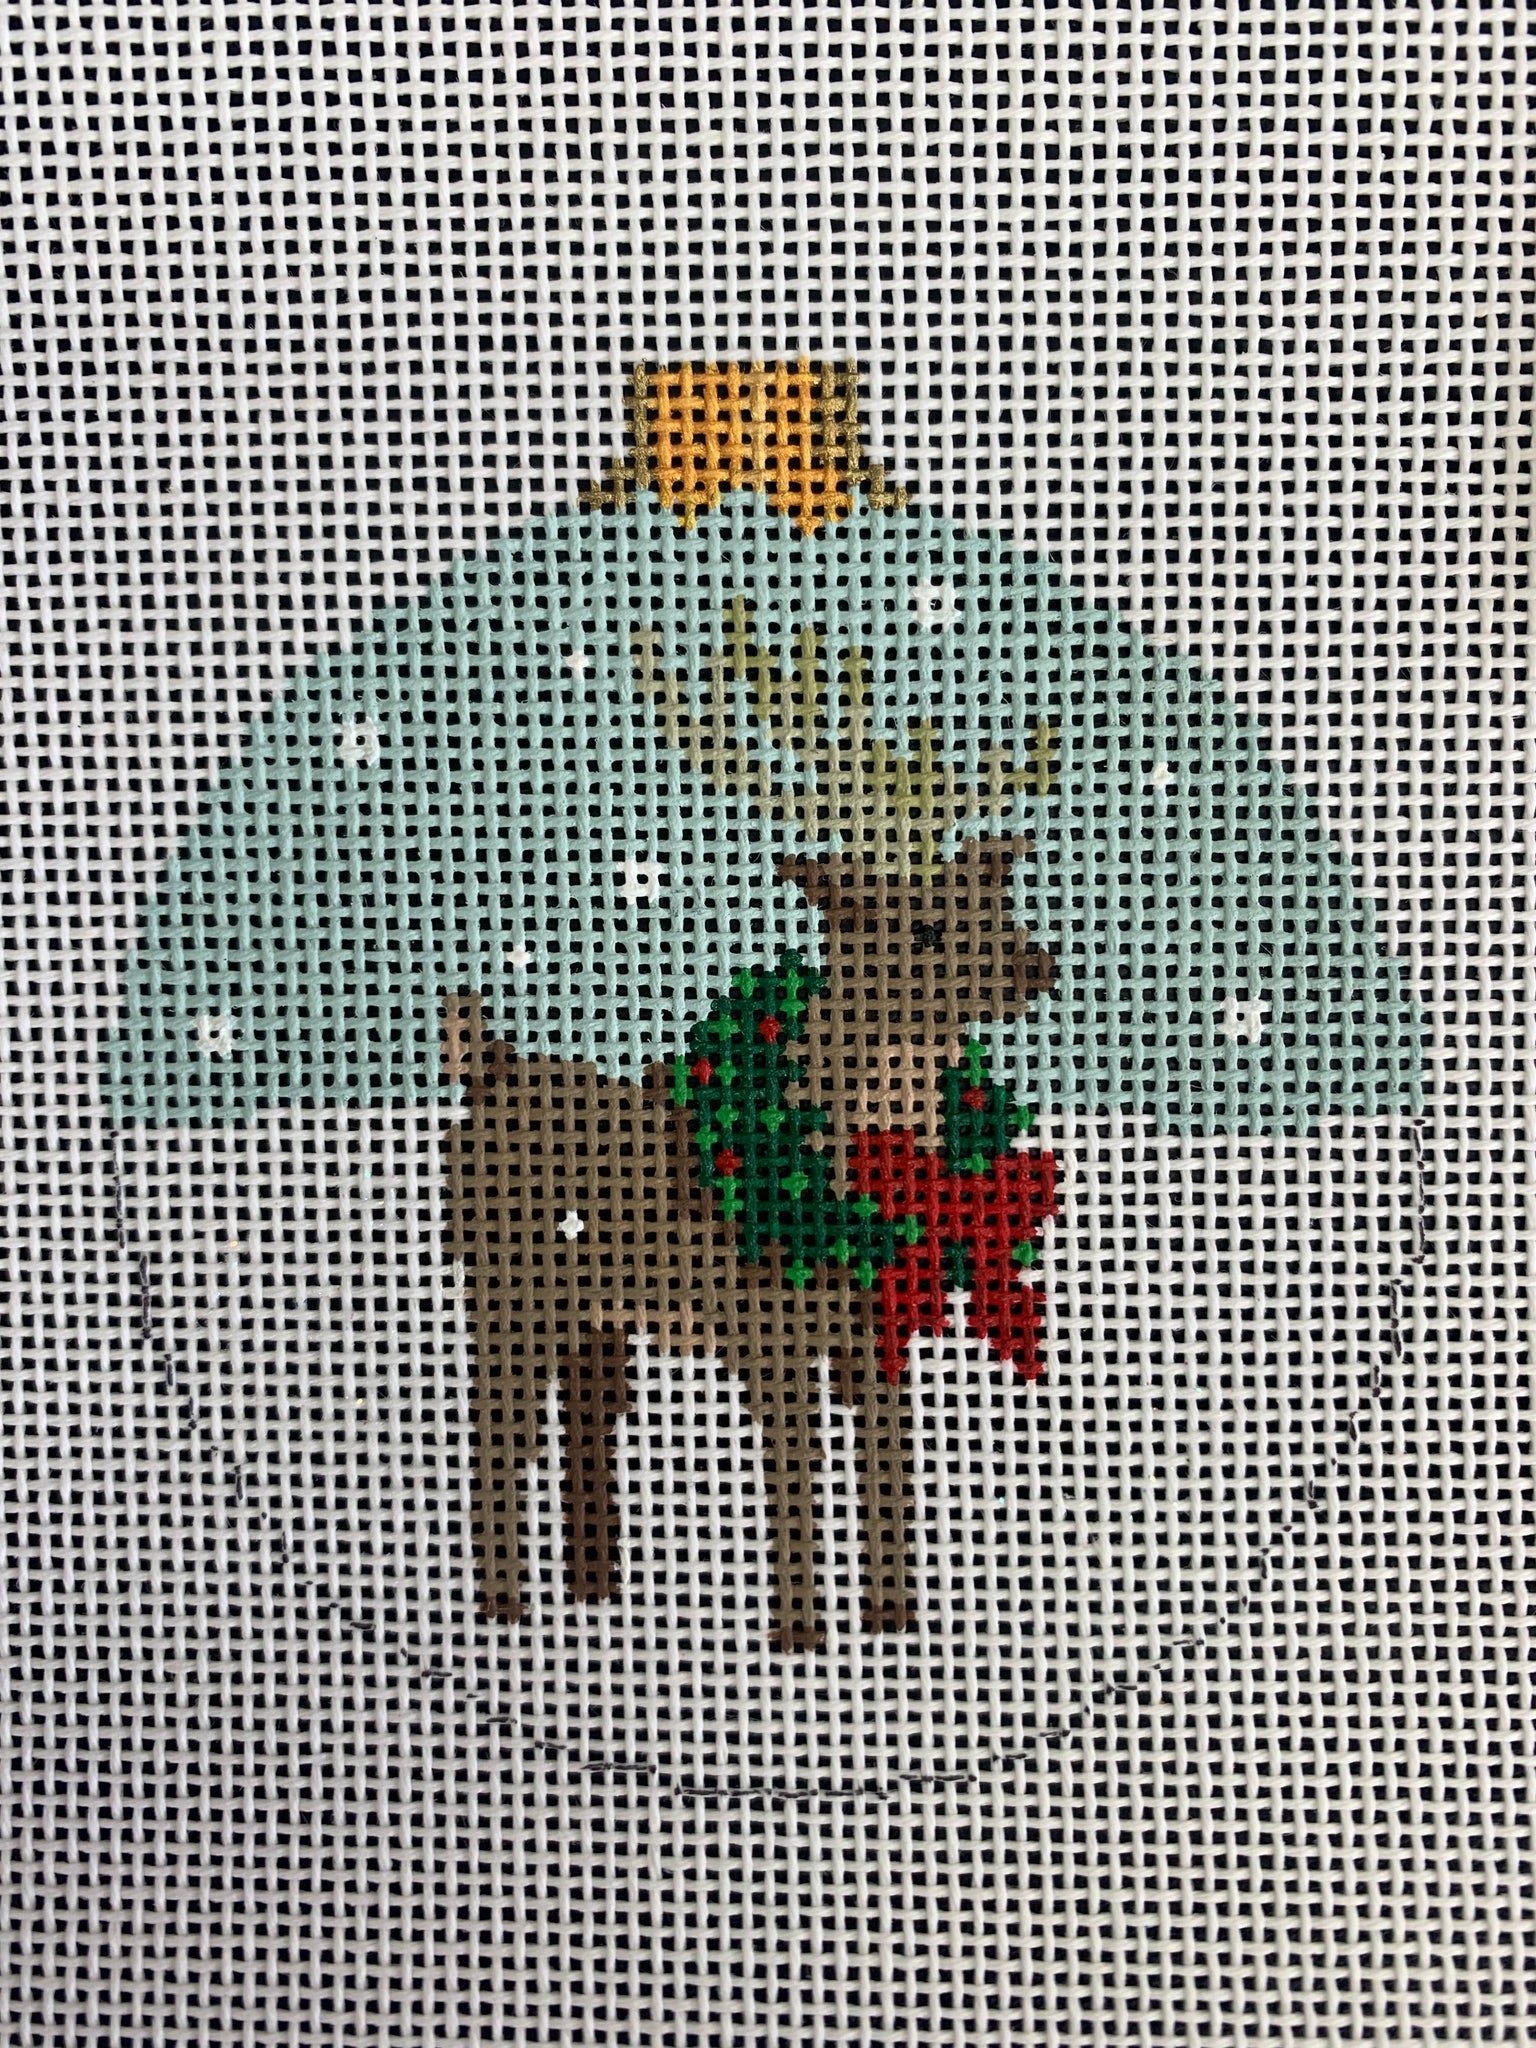 Ornament: Reindeer in Wreath